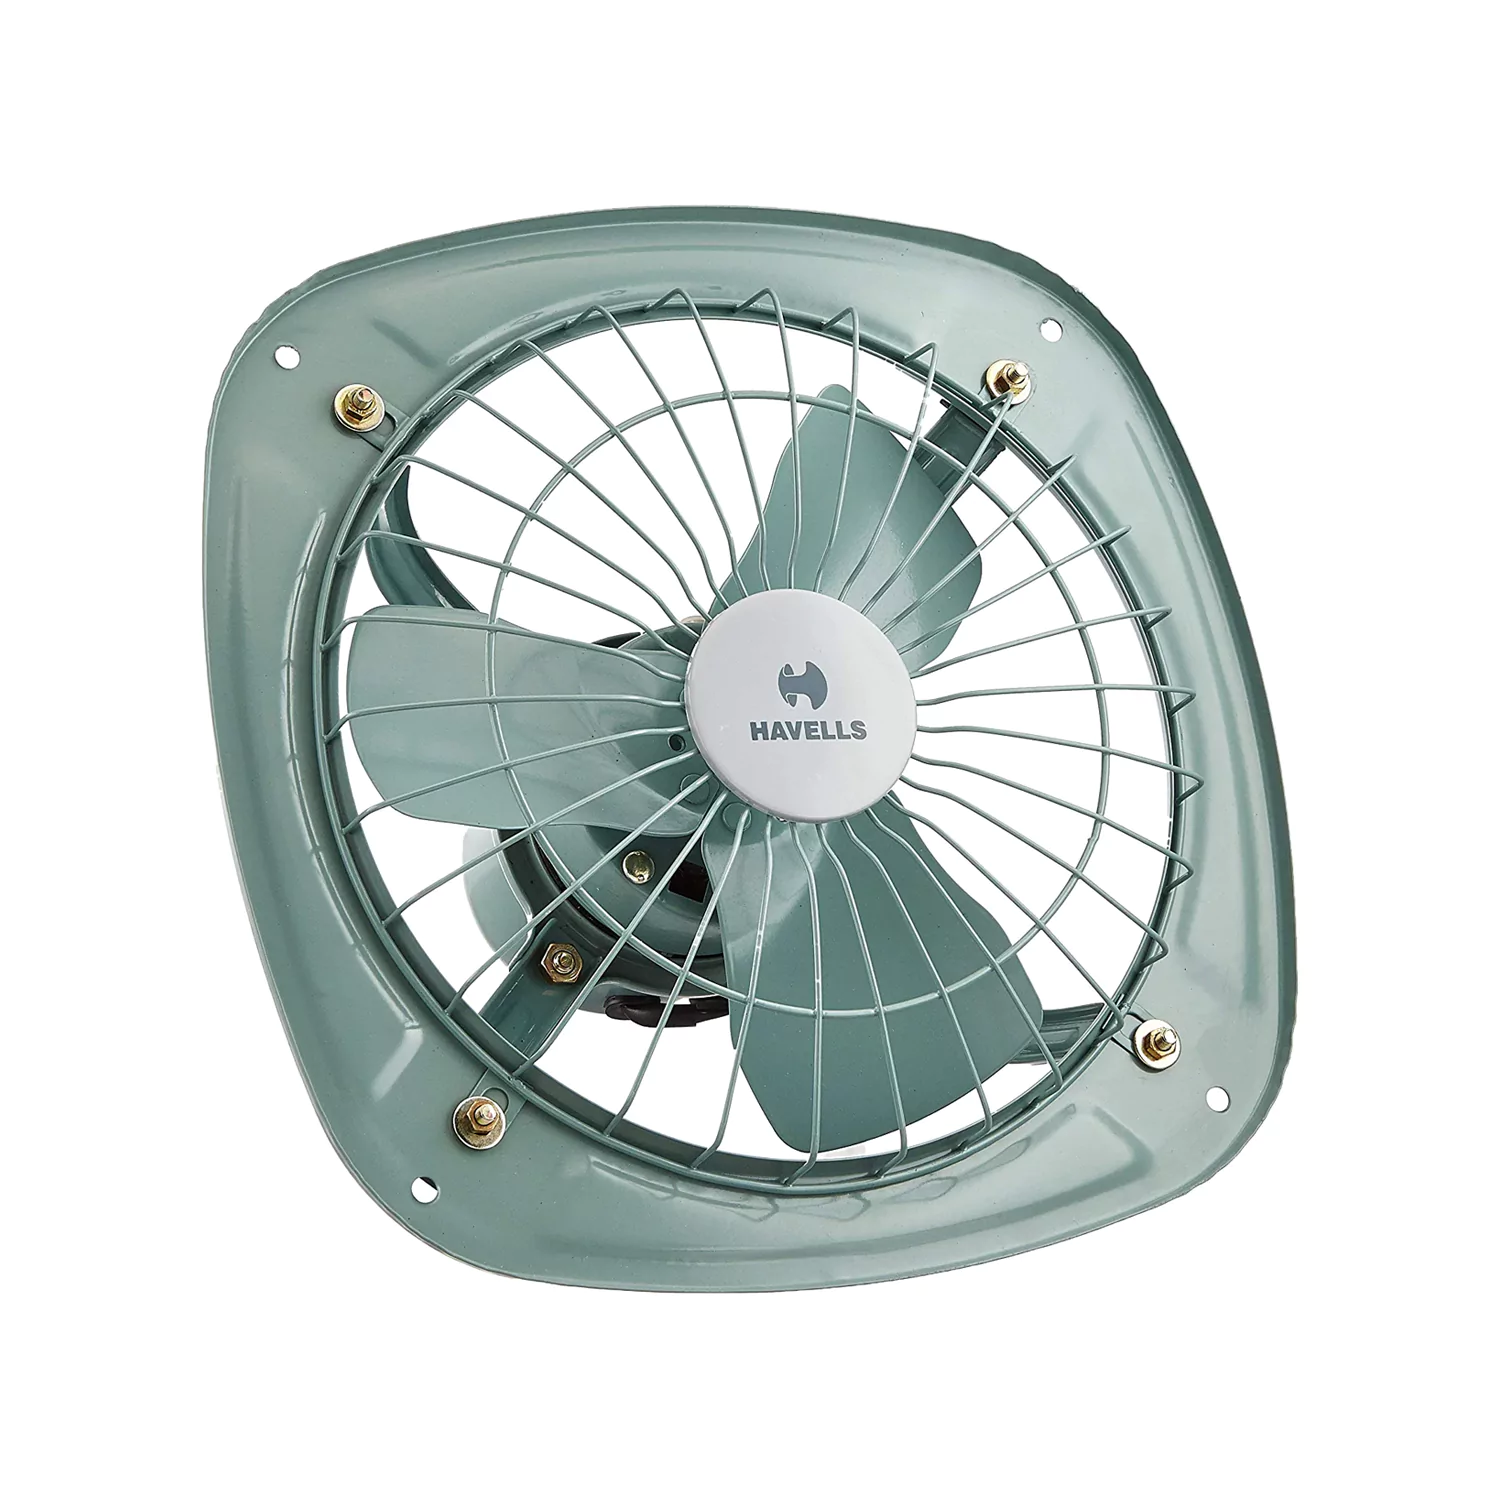 Havells Ventil Air DSP 300mm Exhaust Fan